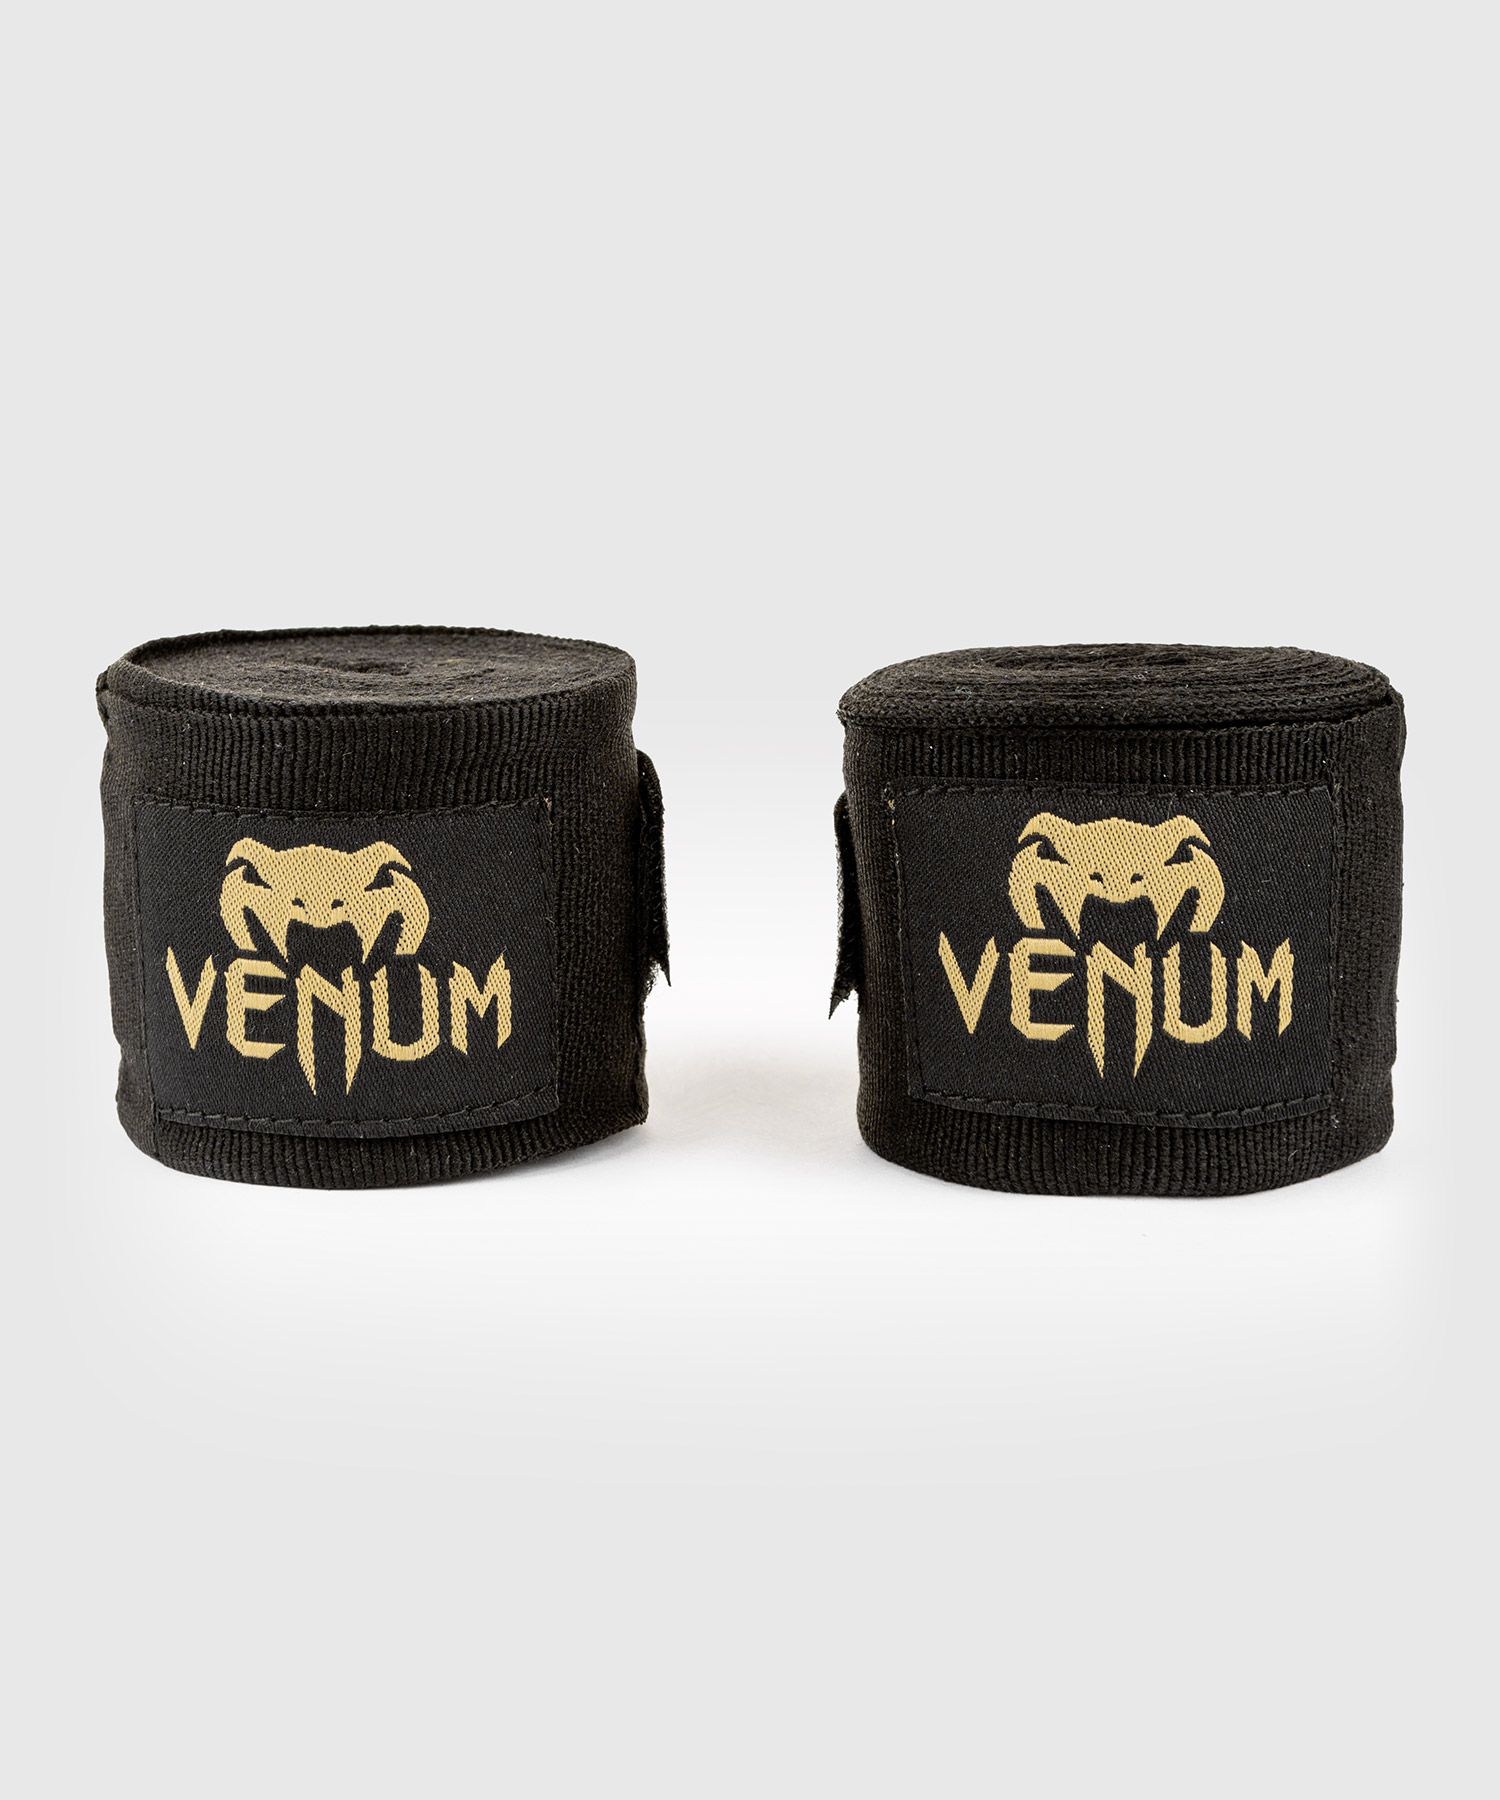 BANDE VENUM 4 M NOIR / BLANC BOXE REUNION – Free Fight Wear